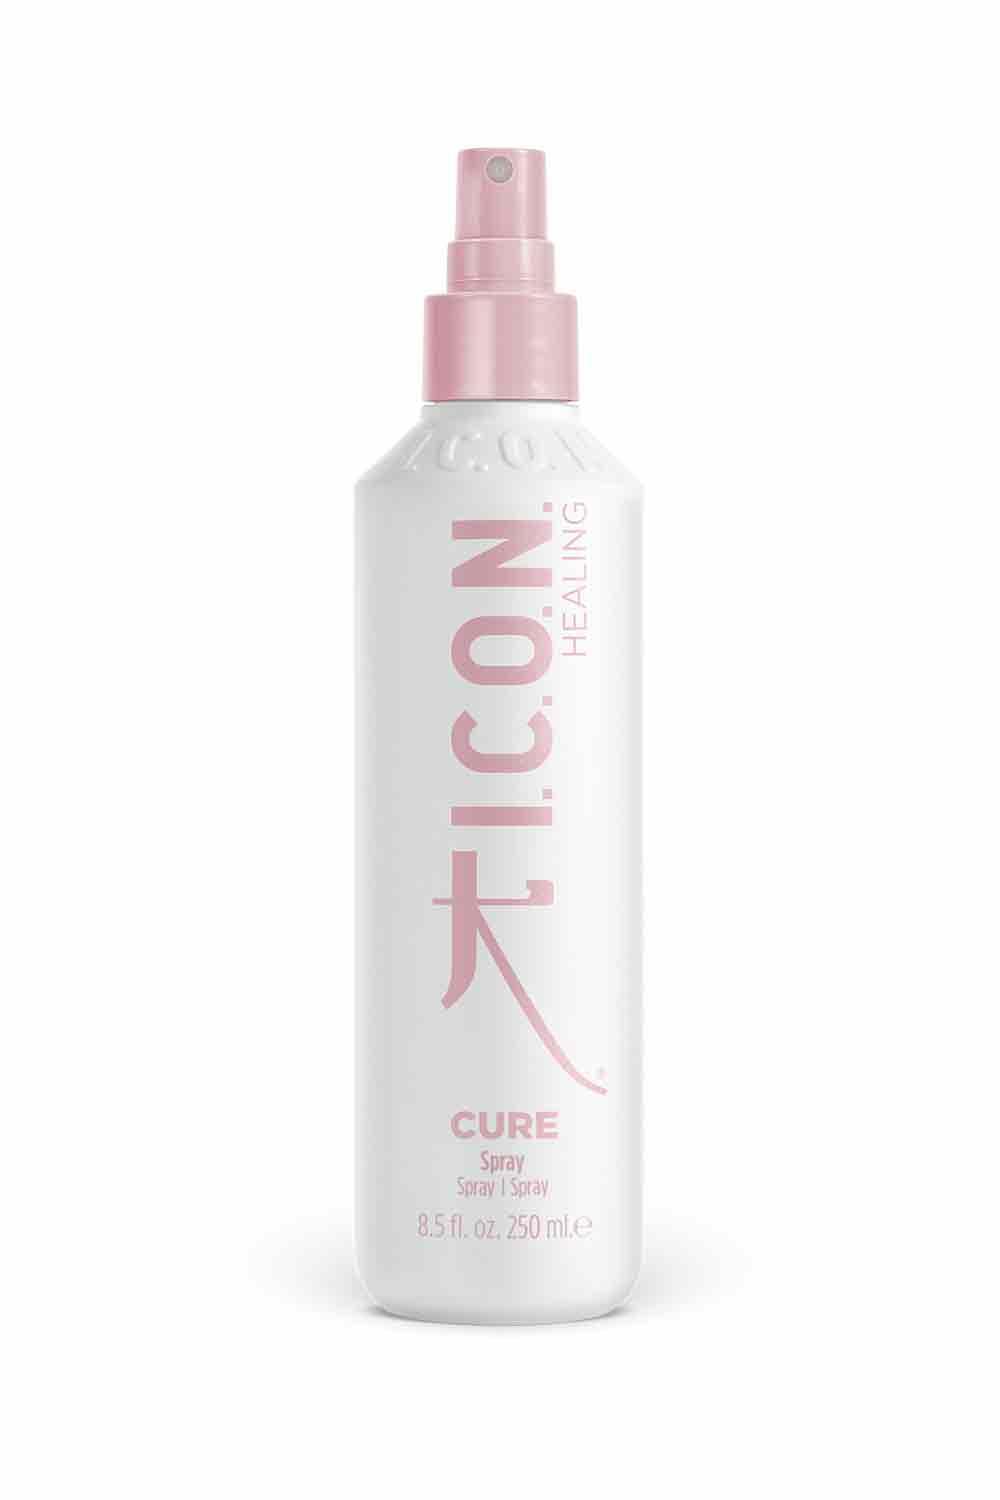 ico7. Spray Revitalizante Cure, I.C.O.N